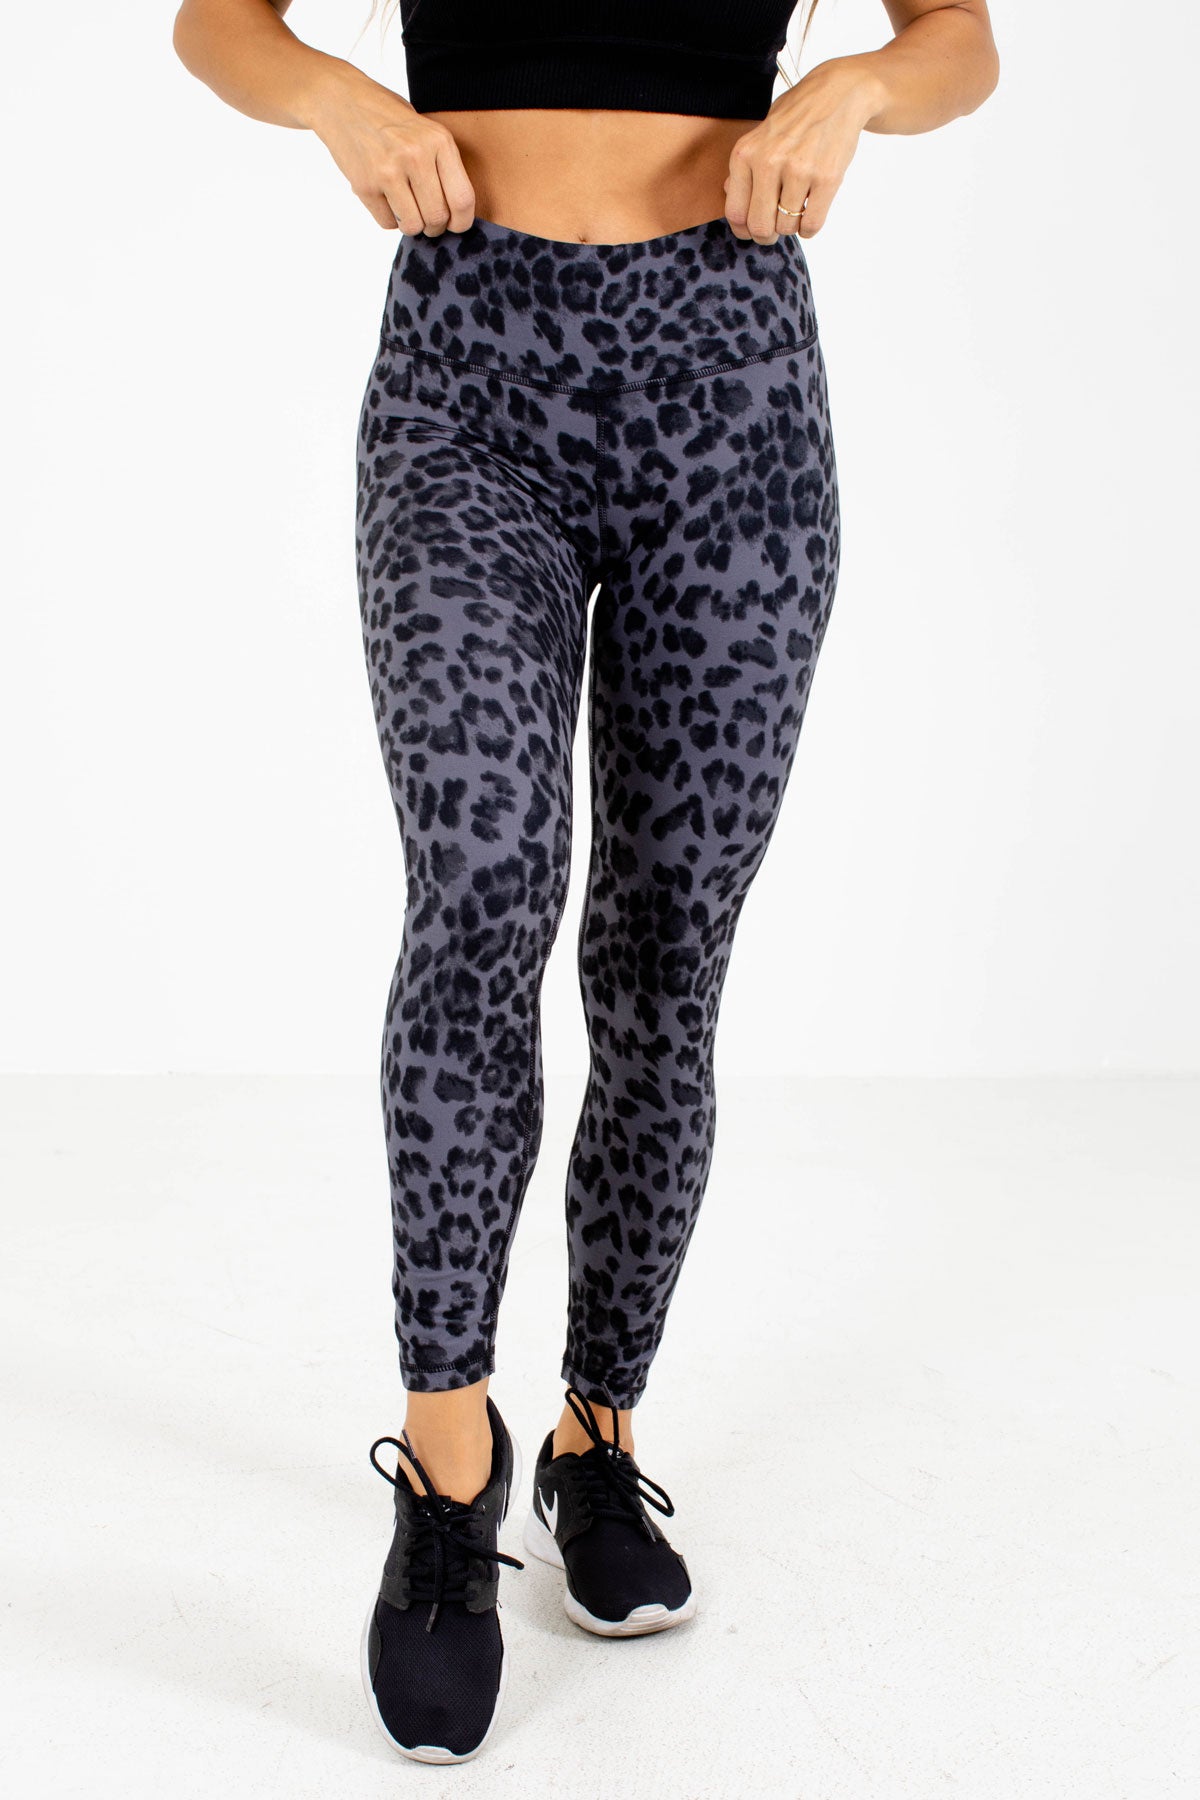 ADAGRO Ladies Tights Contrast Leopard Side Seam Leggings (Color : Black,  Size : Medium) : : Clothing, Shoes & Accessories